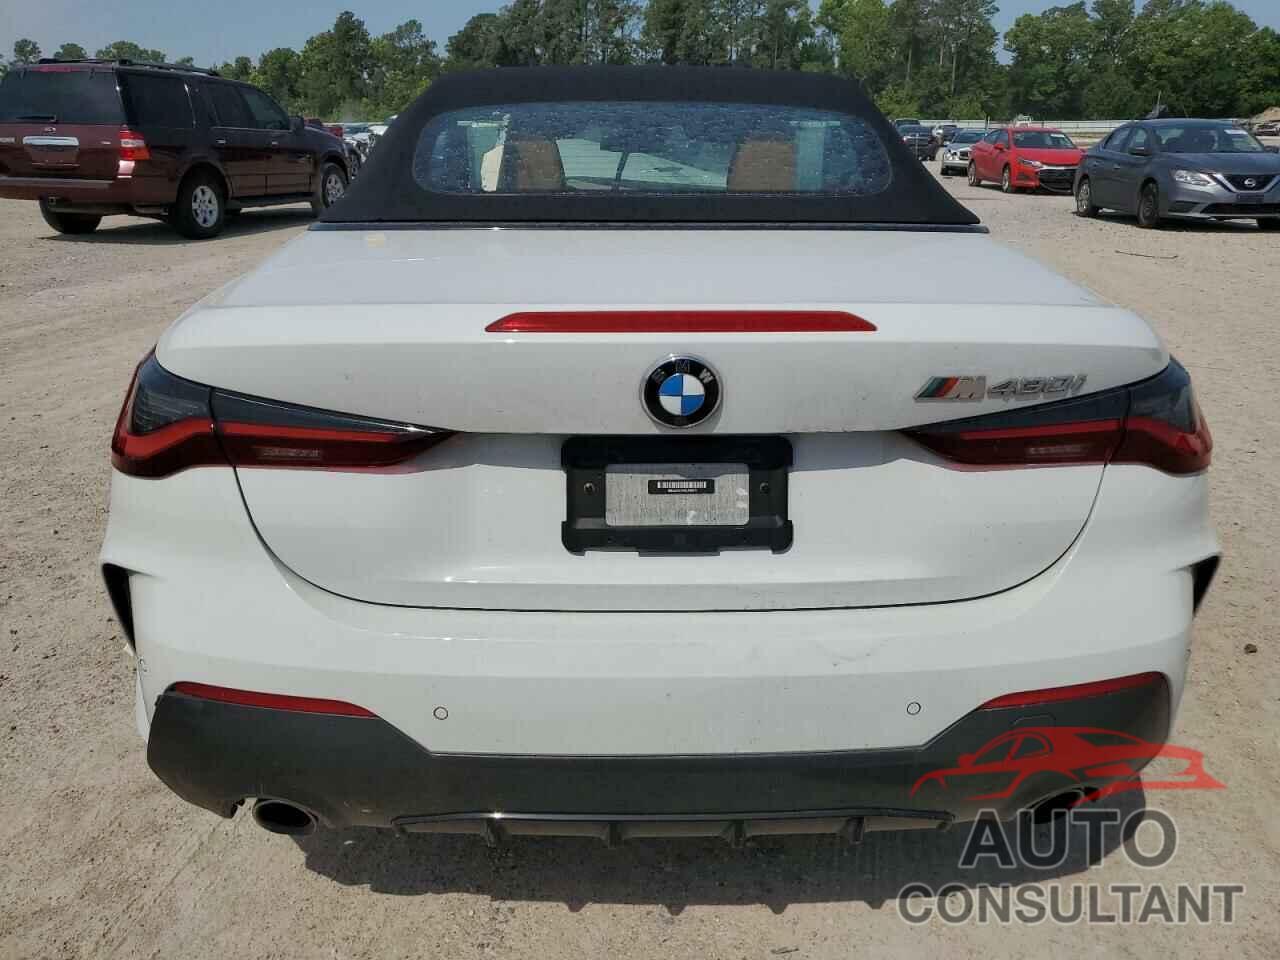 BMW 4 SERIES 2022 - WBA23AT00NCJ49075